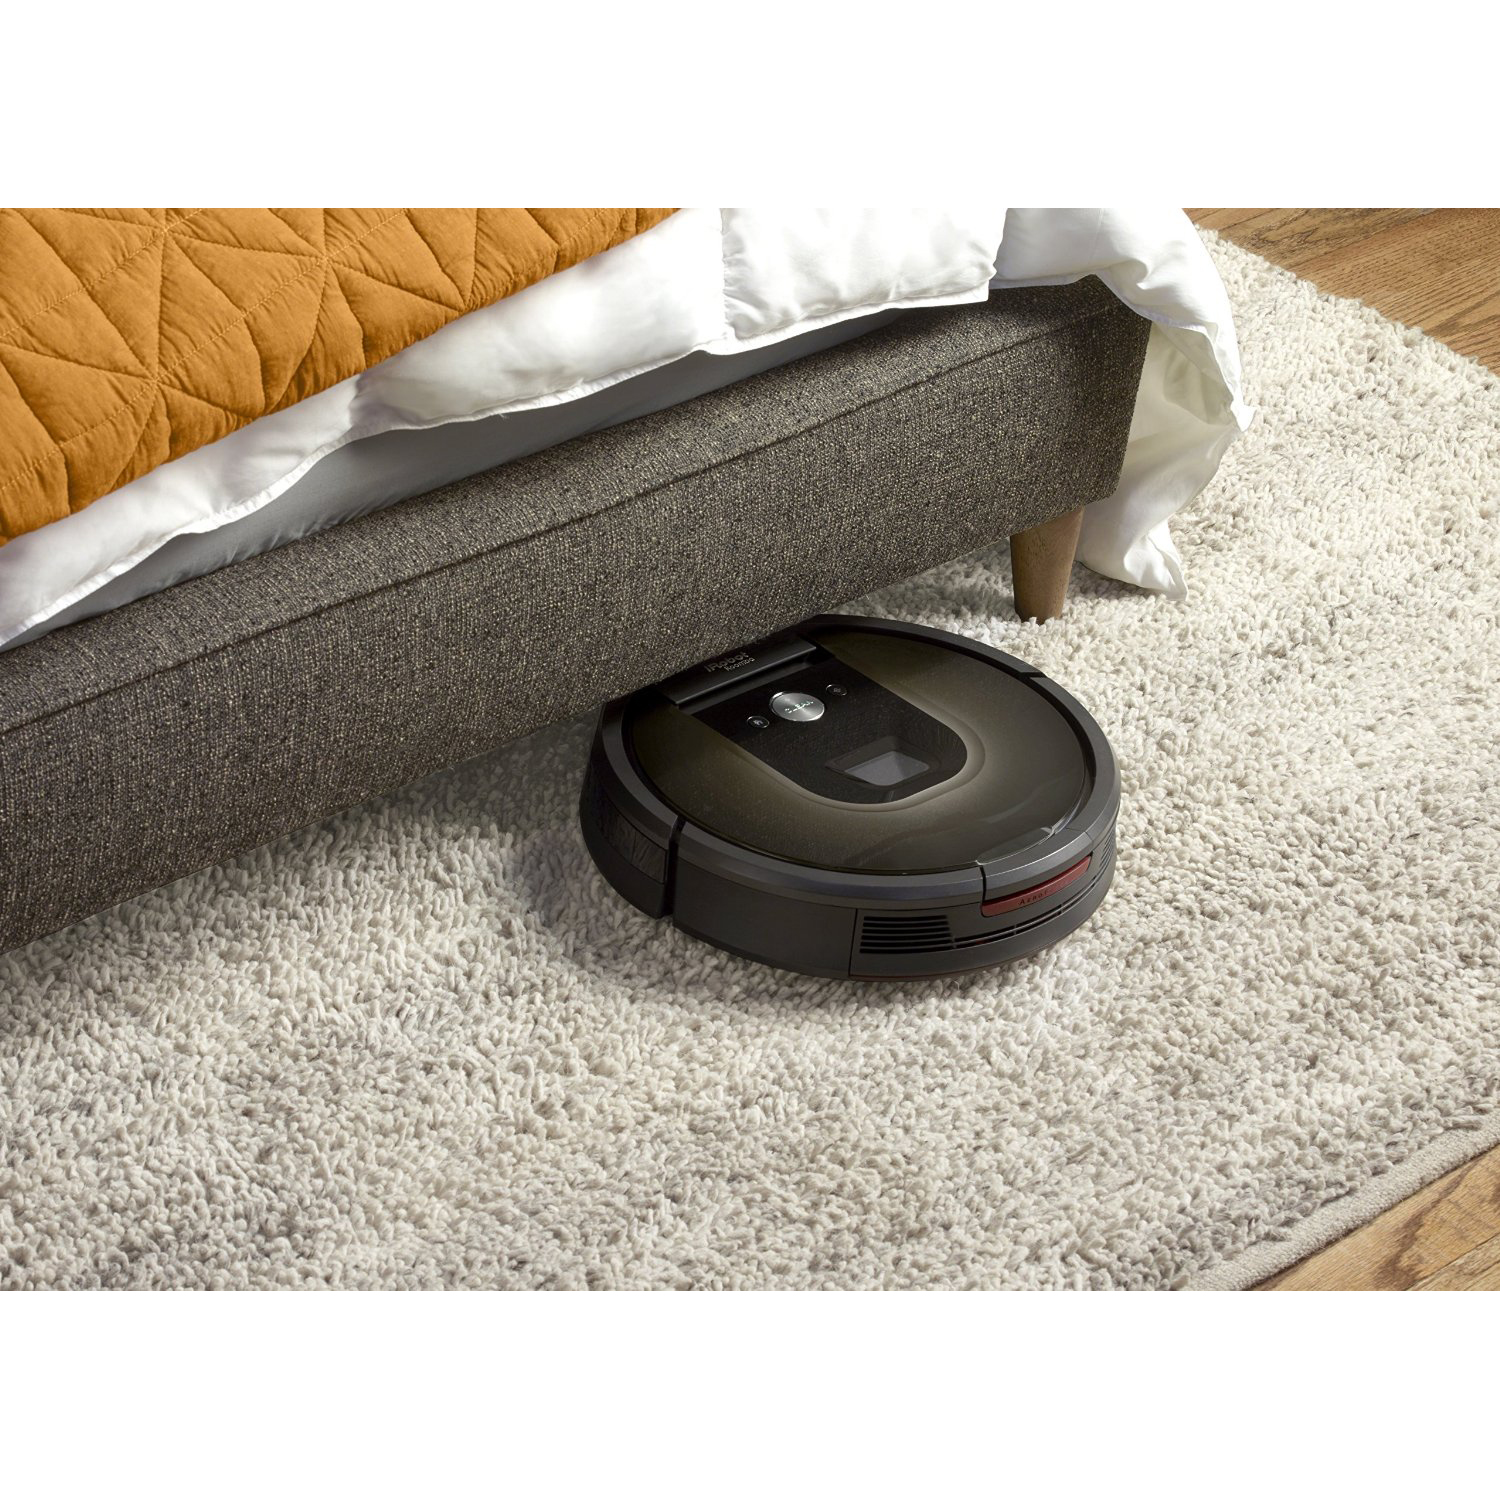 iRobot Roomba 980 Navigator Rechargeable Automatic Robotic Vacuum Cleaner - image 4 of 5